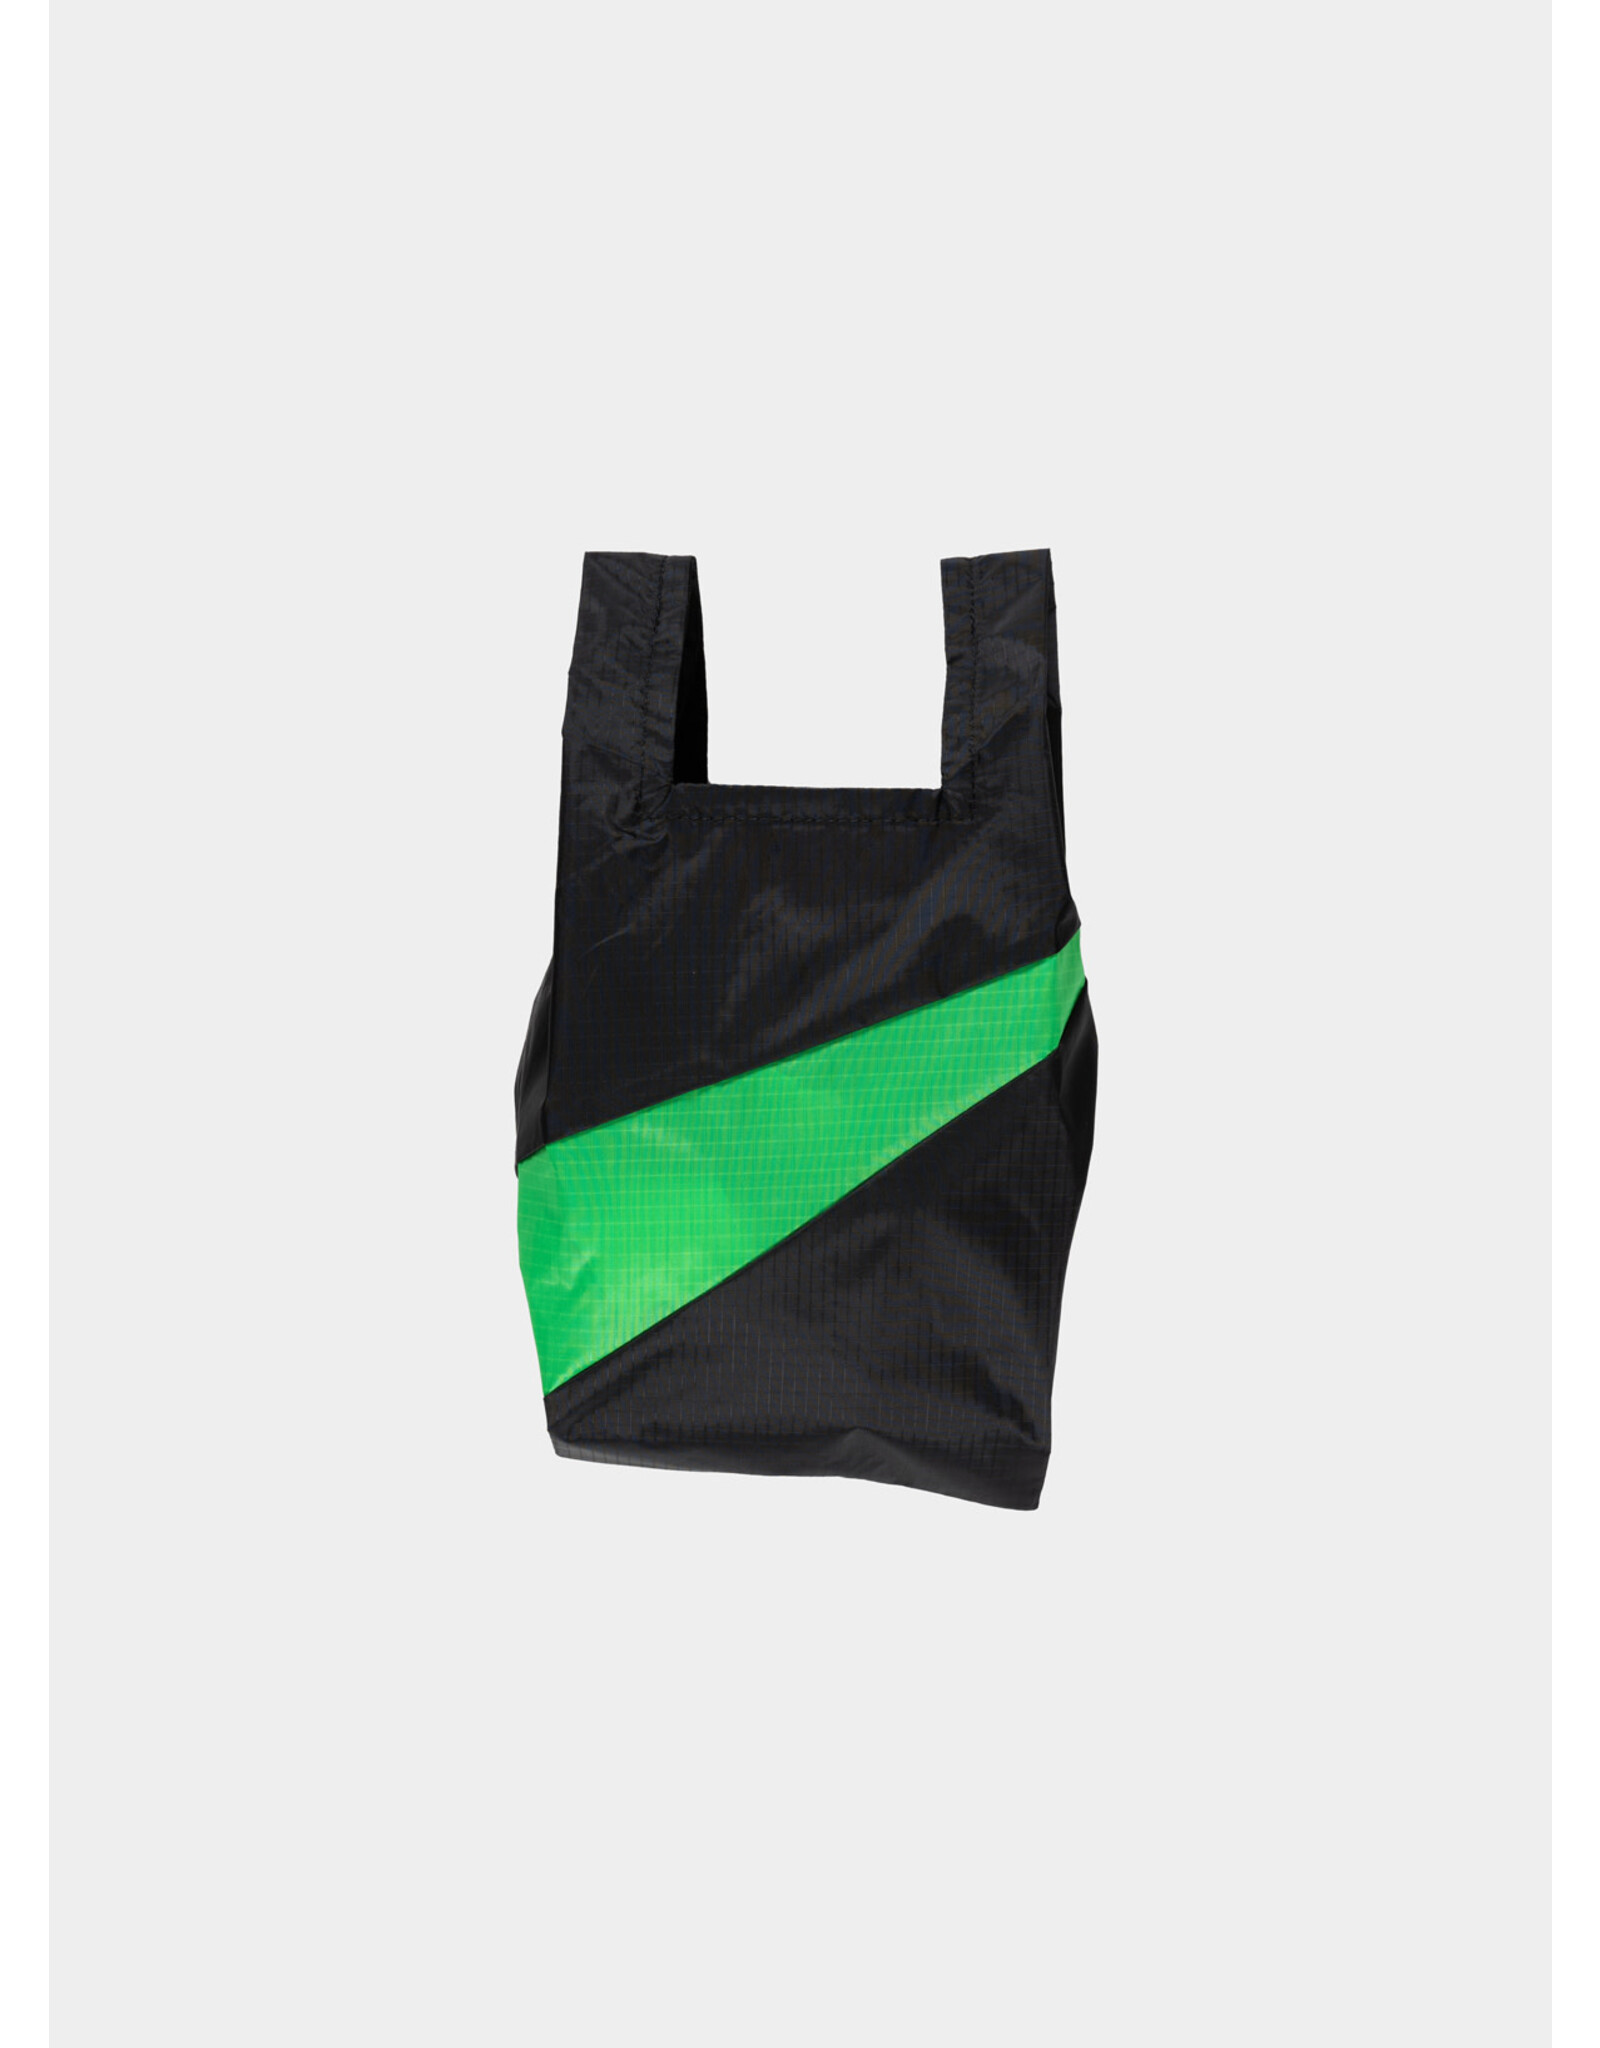 Susan Bijl Shopping bag S, Black & Greenscreen - 18 x 39 x 14,5cm